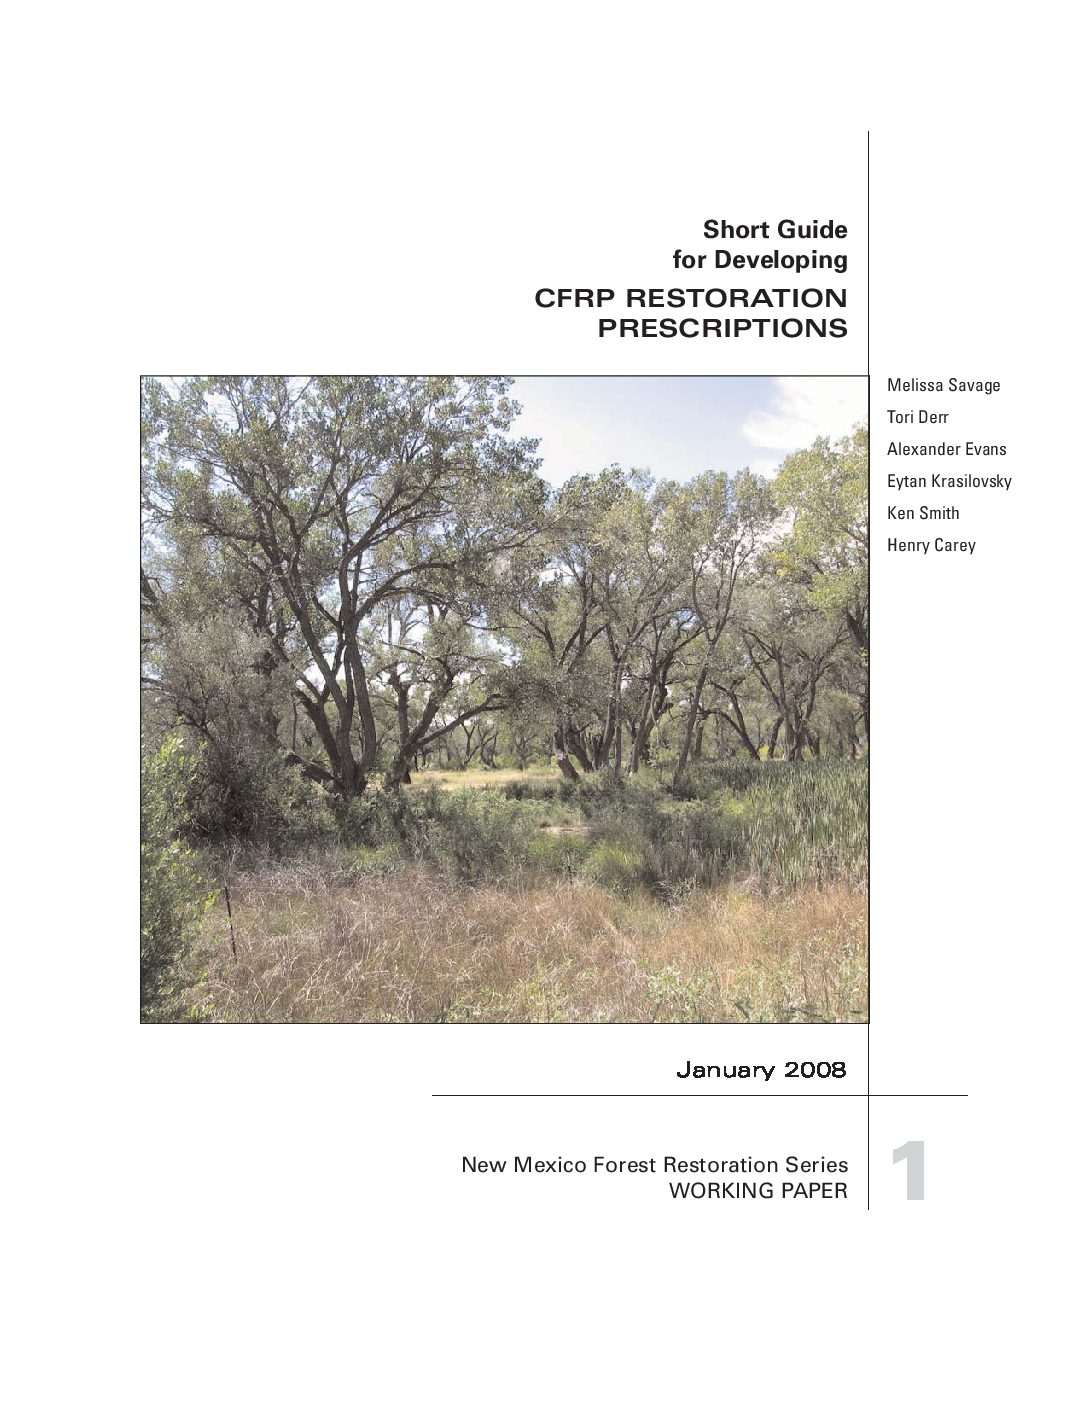 Short Guide for Developing CFRP Restoration Prescriptions